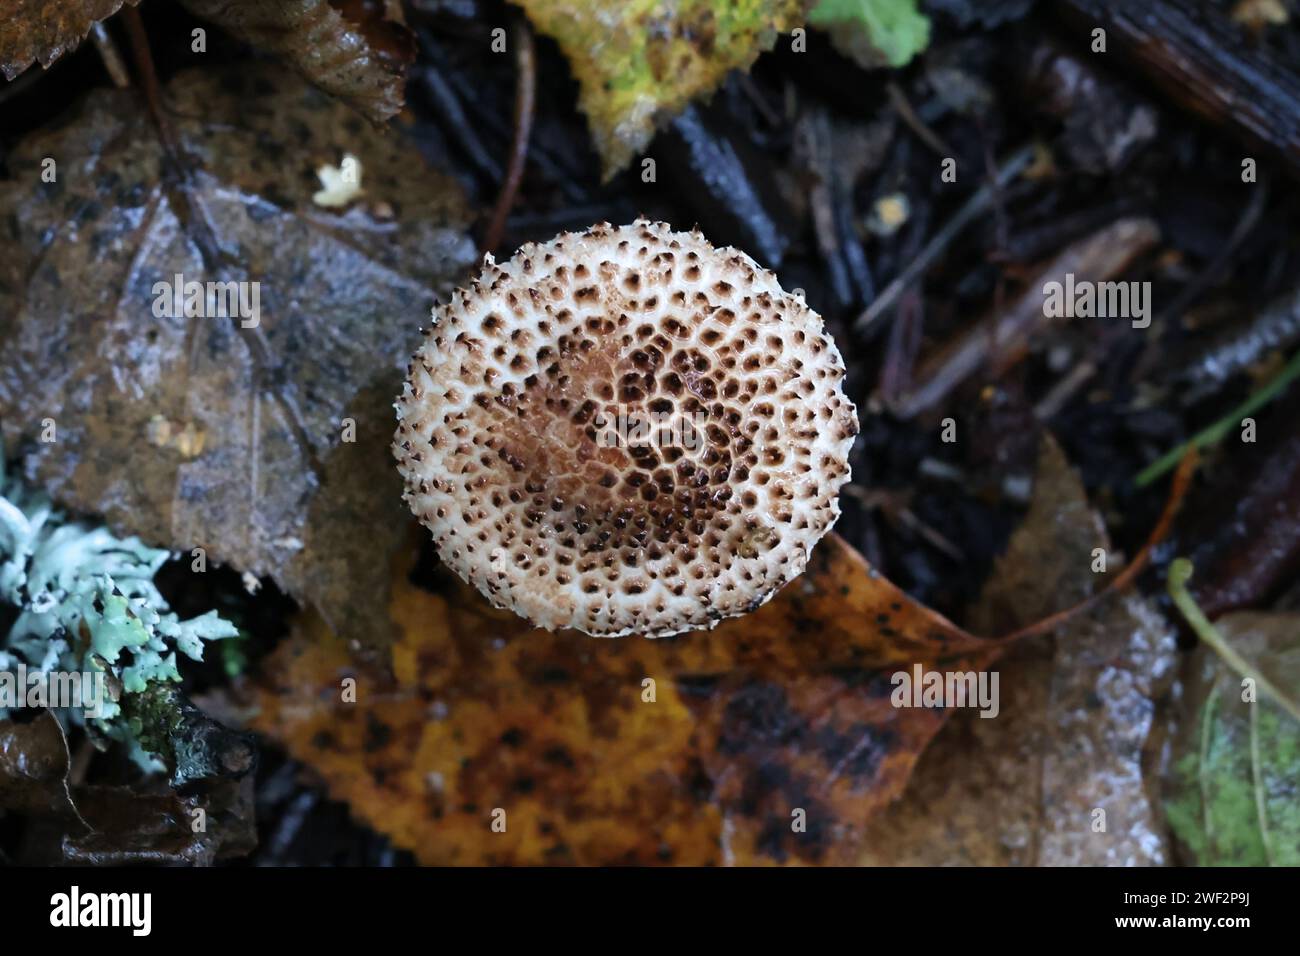 Lepiota echinacea, also called Echinoderma echinaceum, a dapperling mushroom from Finland, no common English name Stock Photo